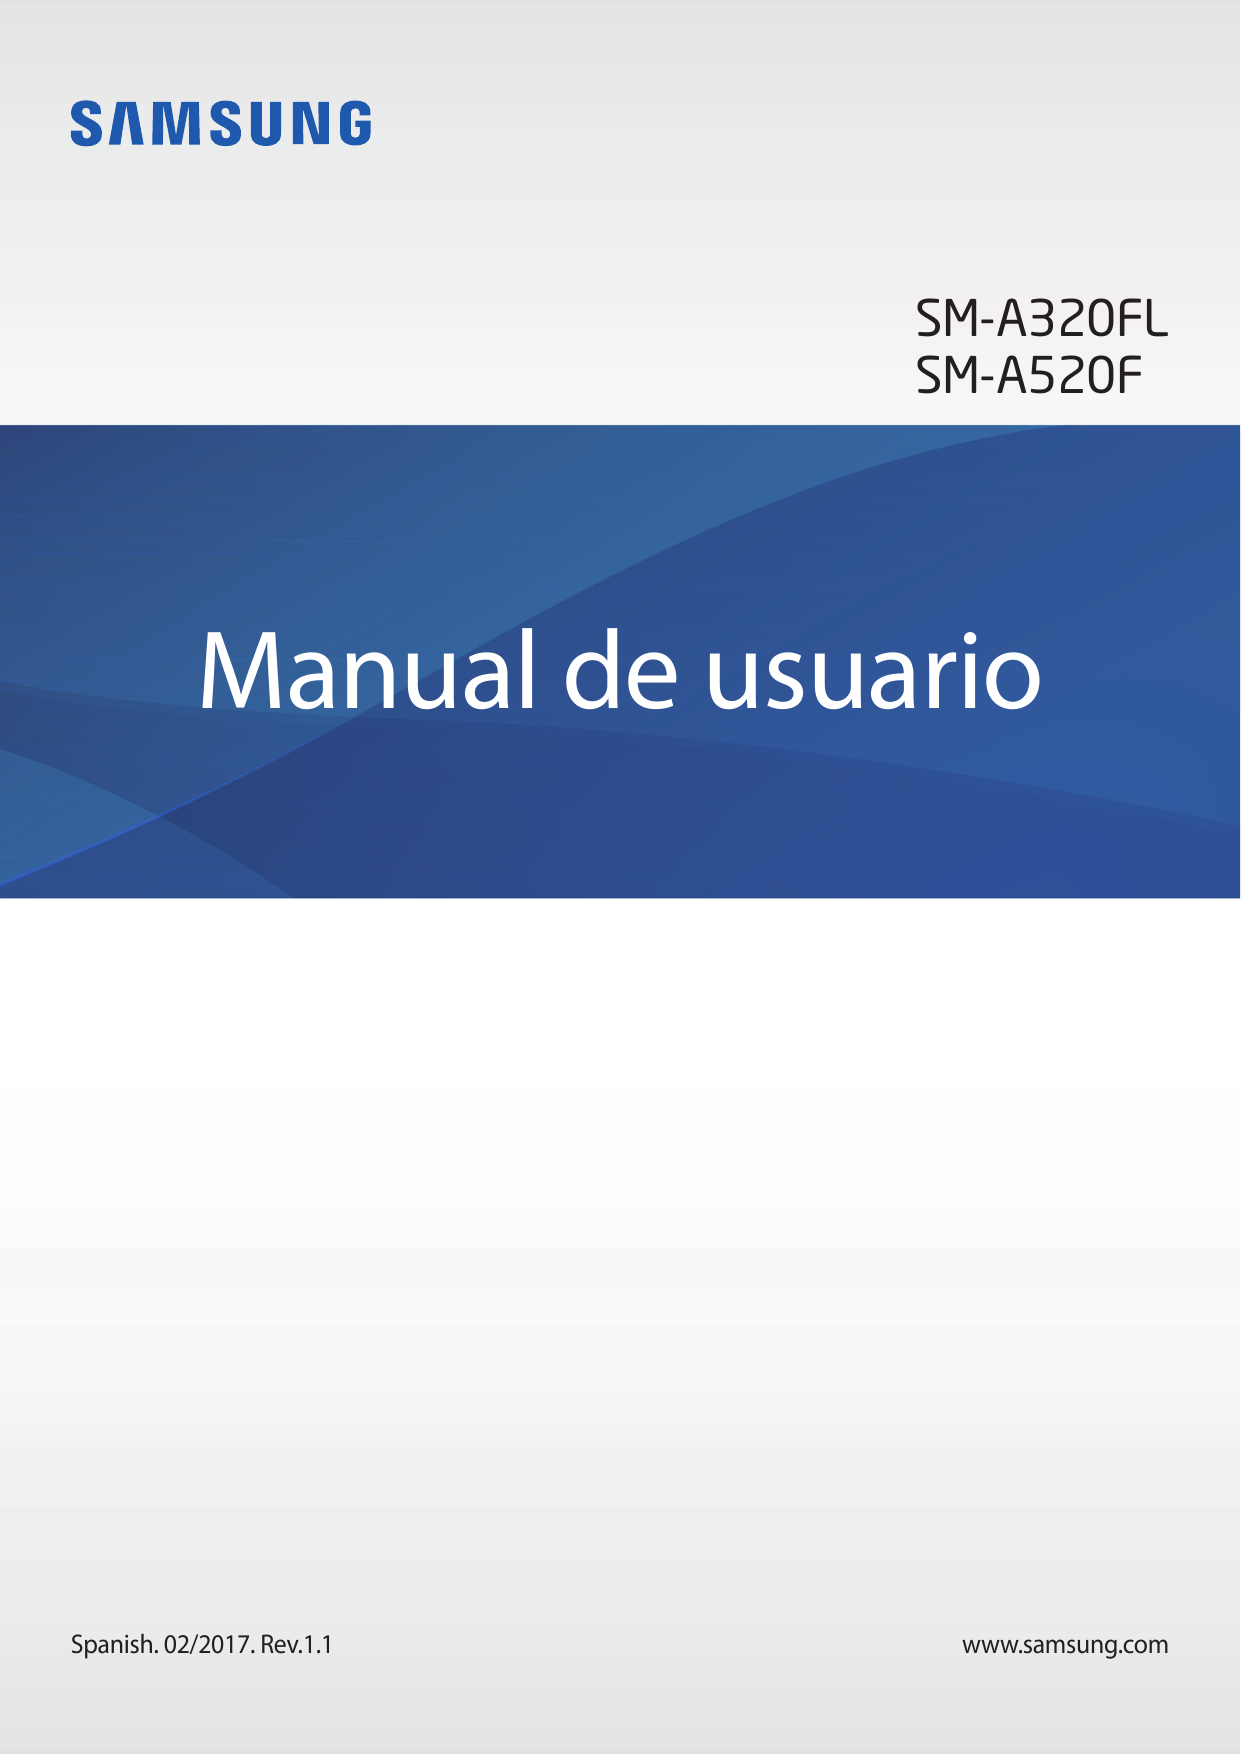 SM-A320FLSM-A520FManual de usuarioSpanish. 02/2017. Rev.1.1www.samsung.com